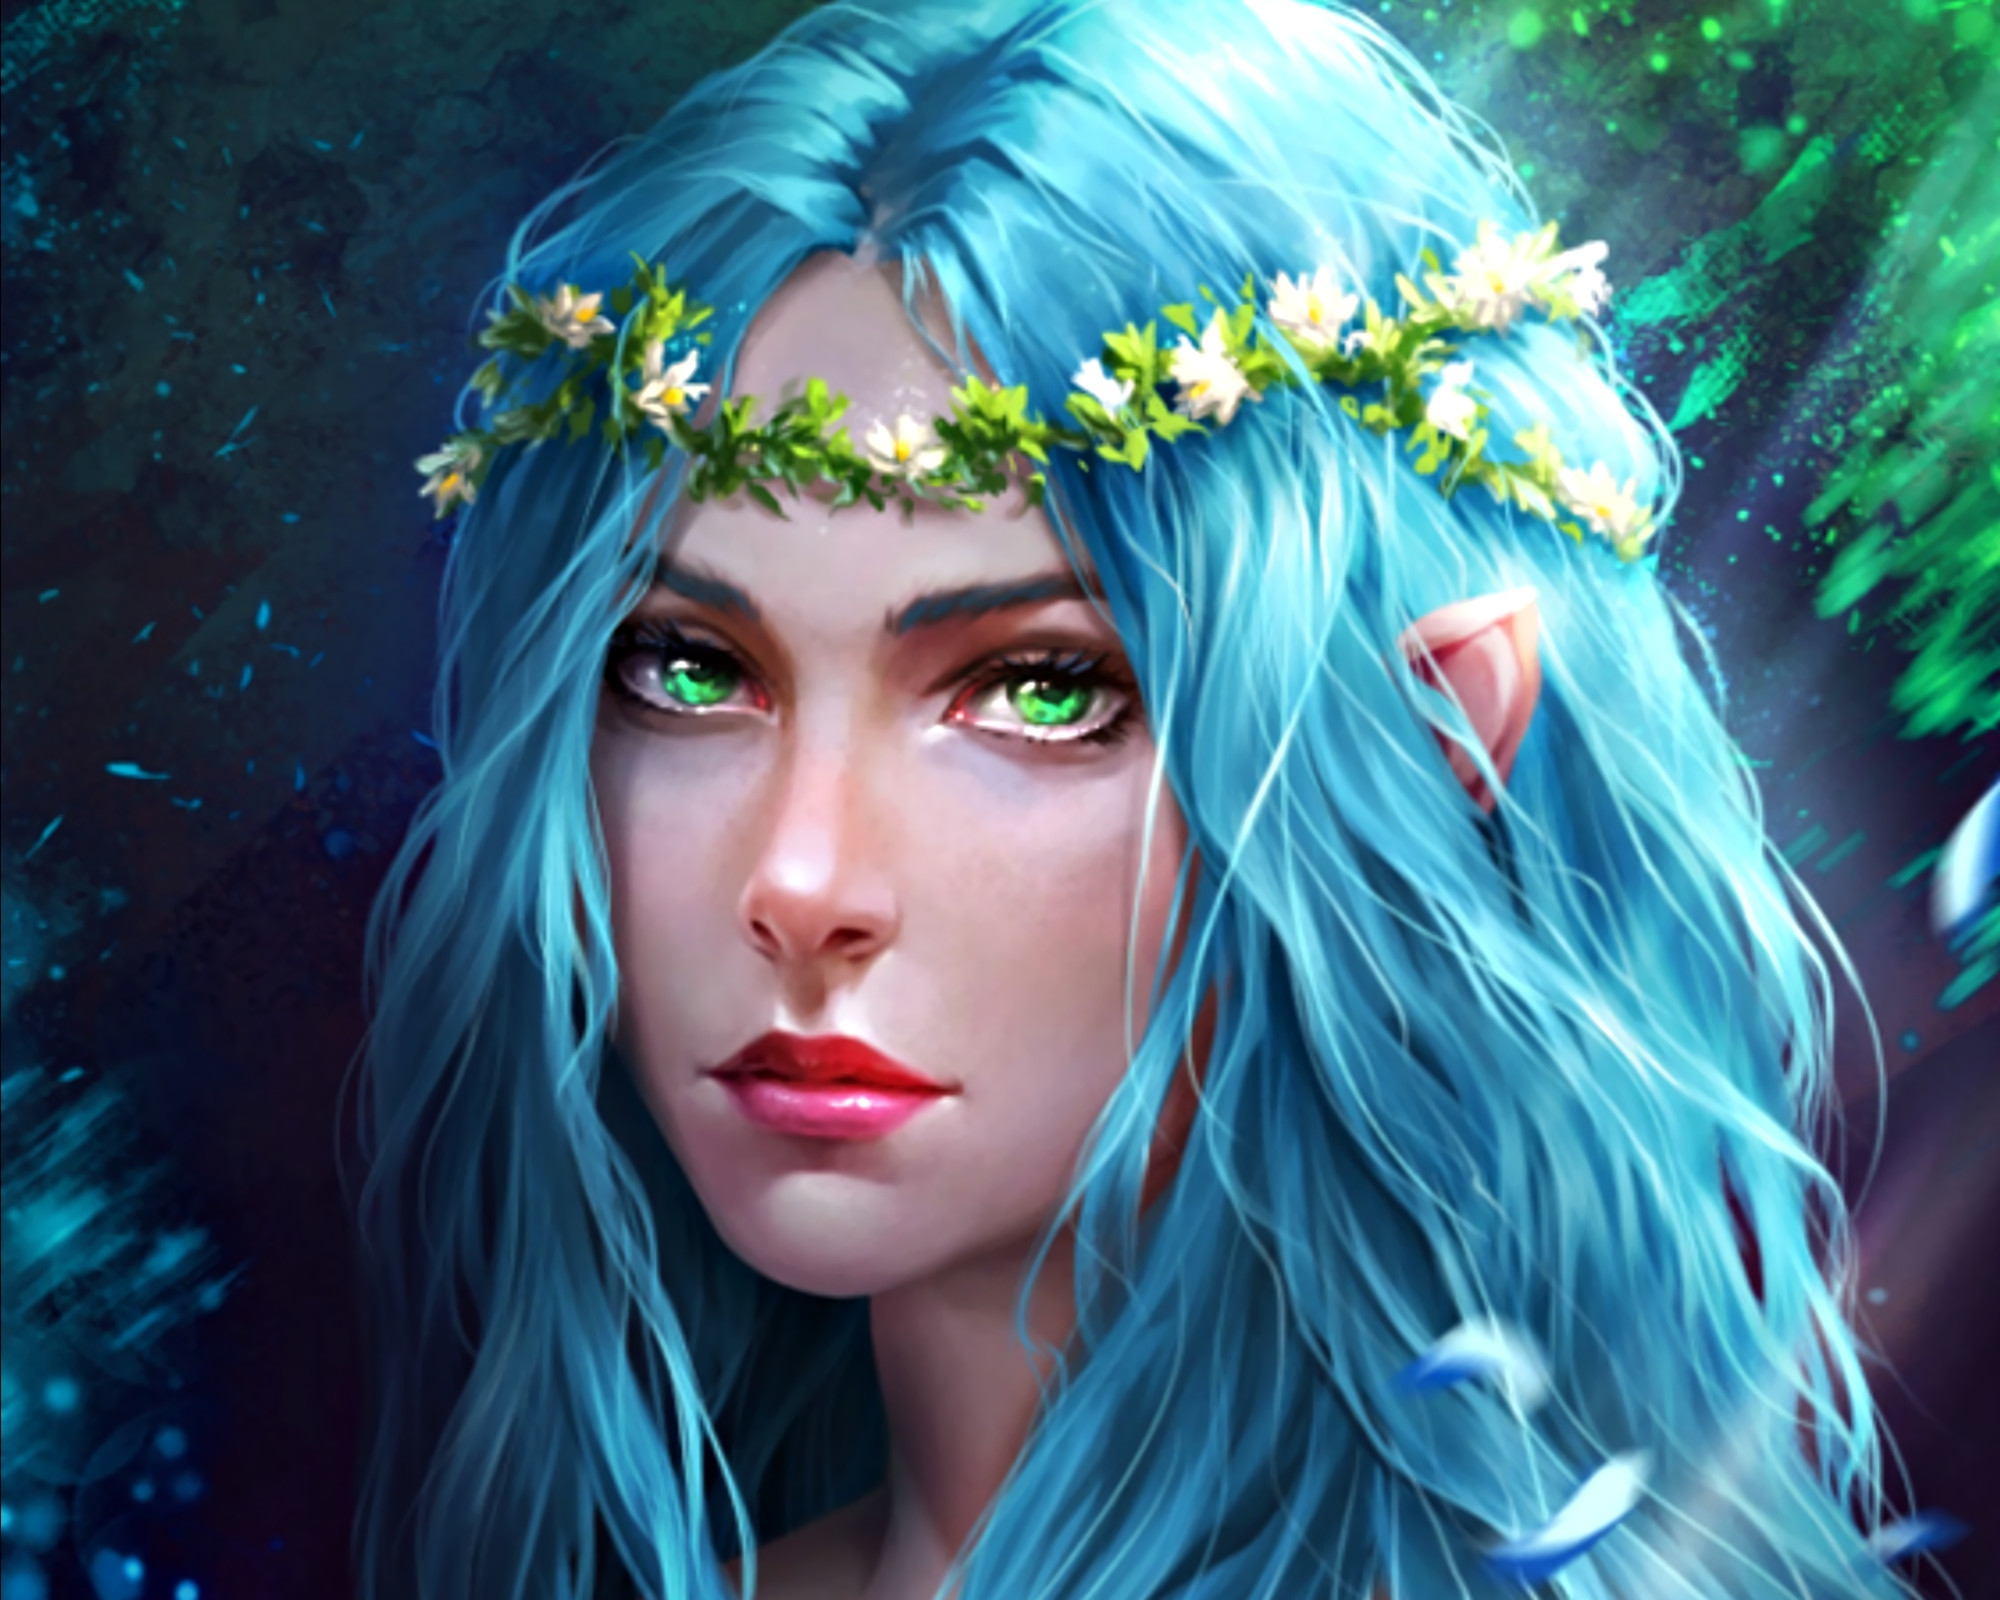 Half-Elf with Blue Hair - wide 4